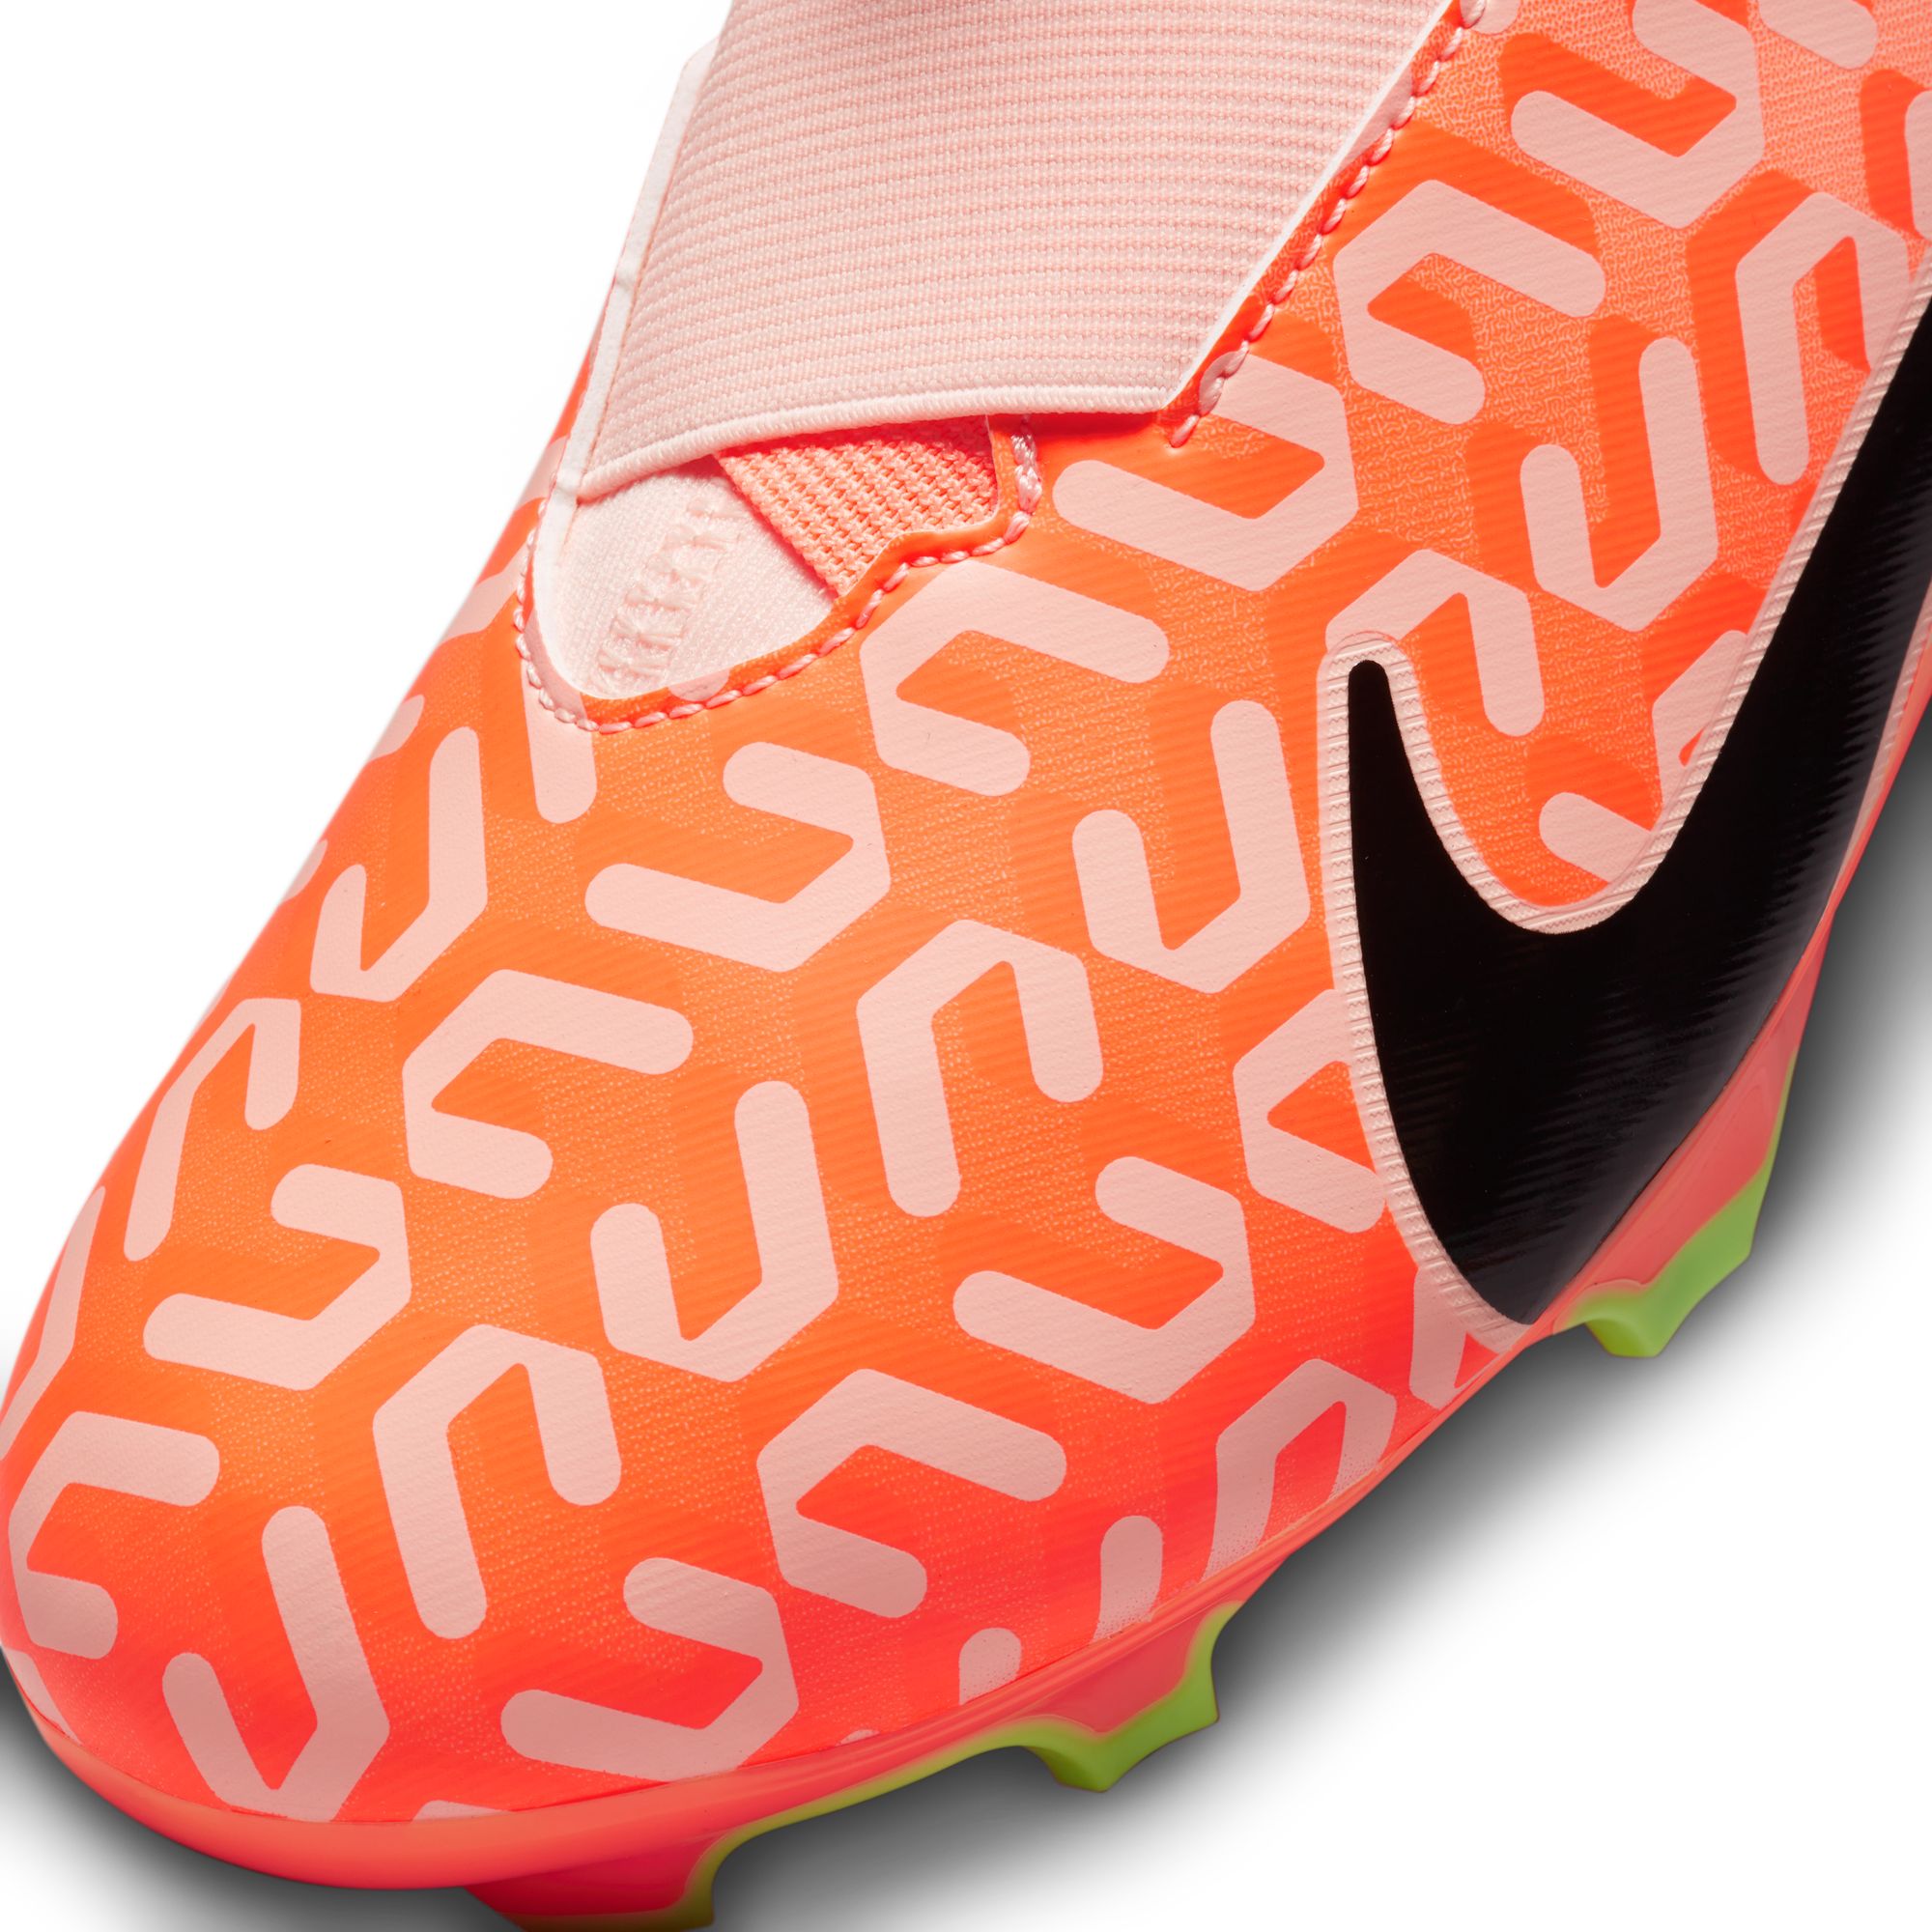 Designer Nike Youth Football Cleats 1.5Y / Orange